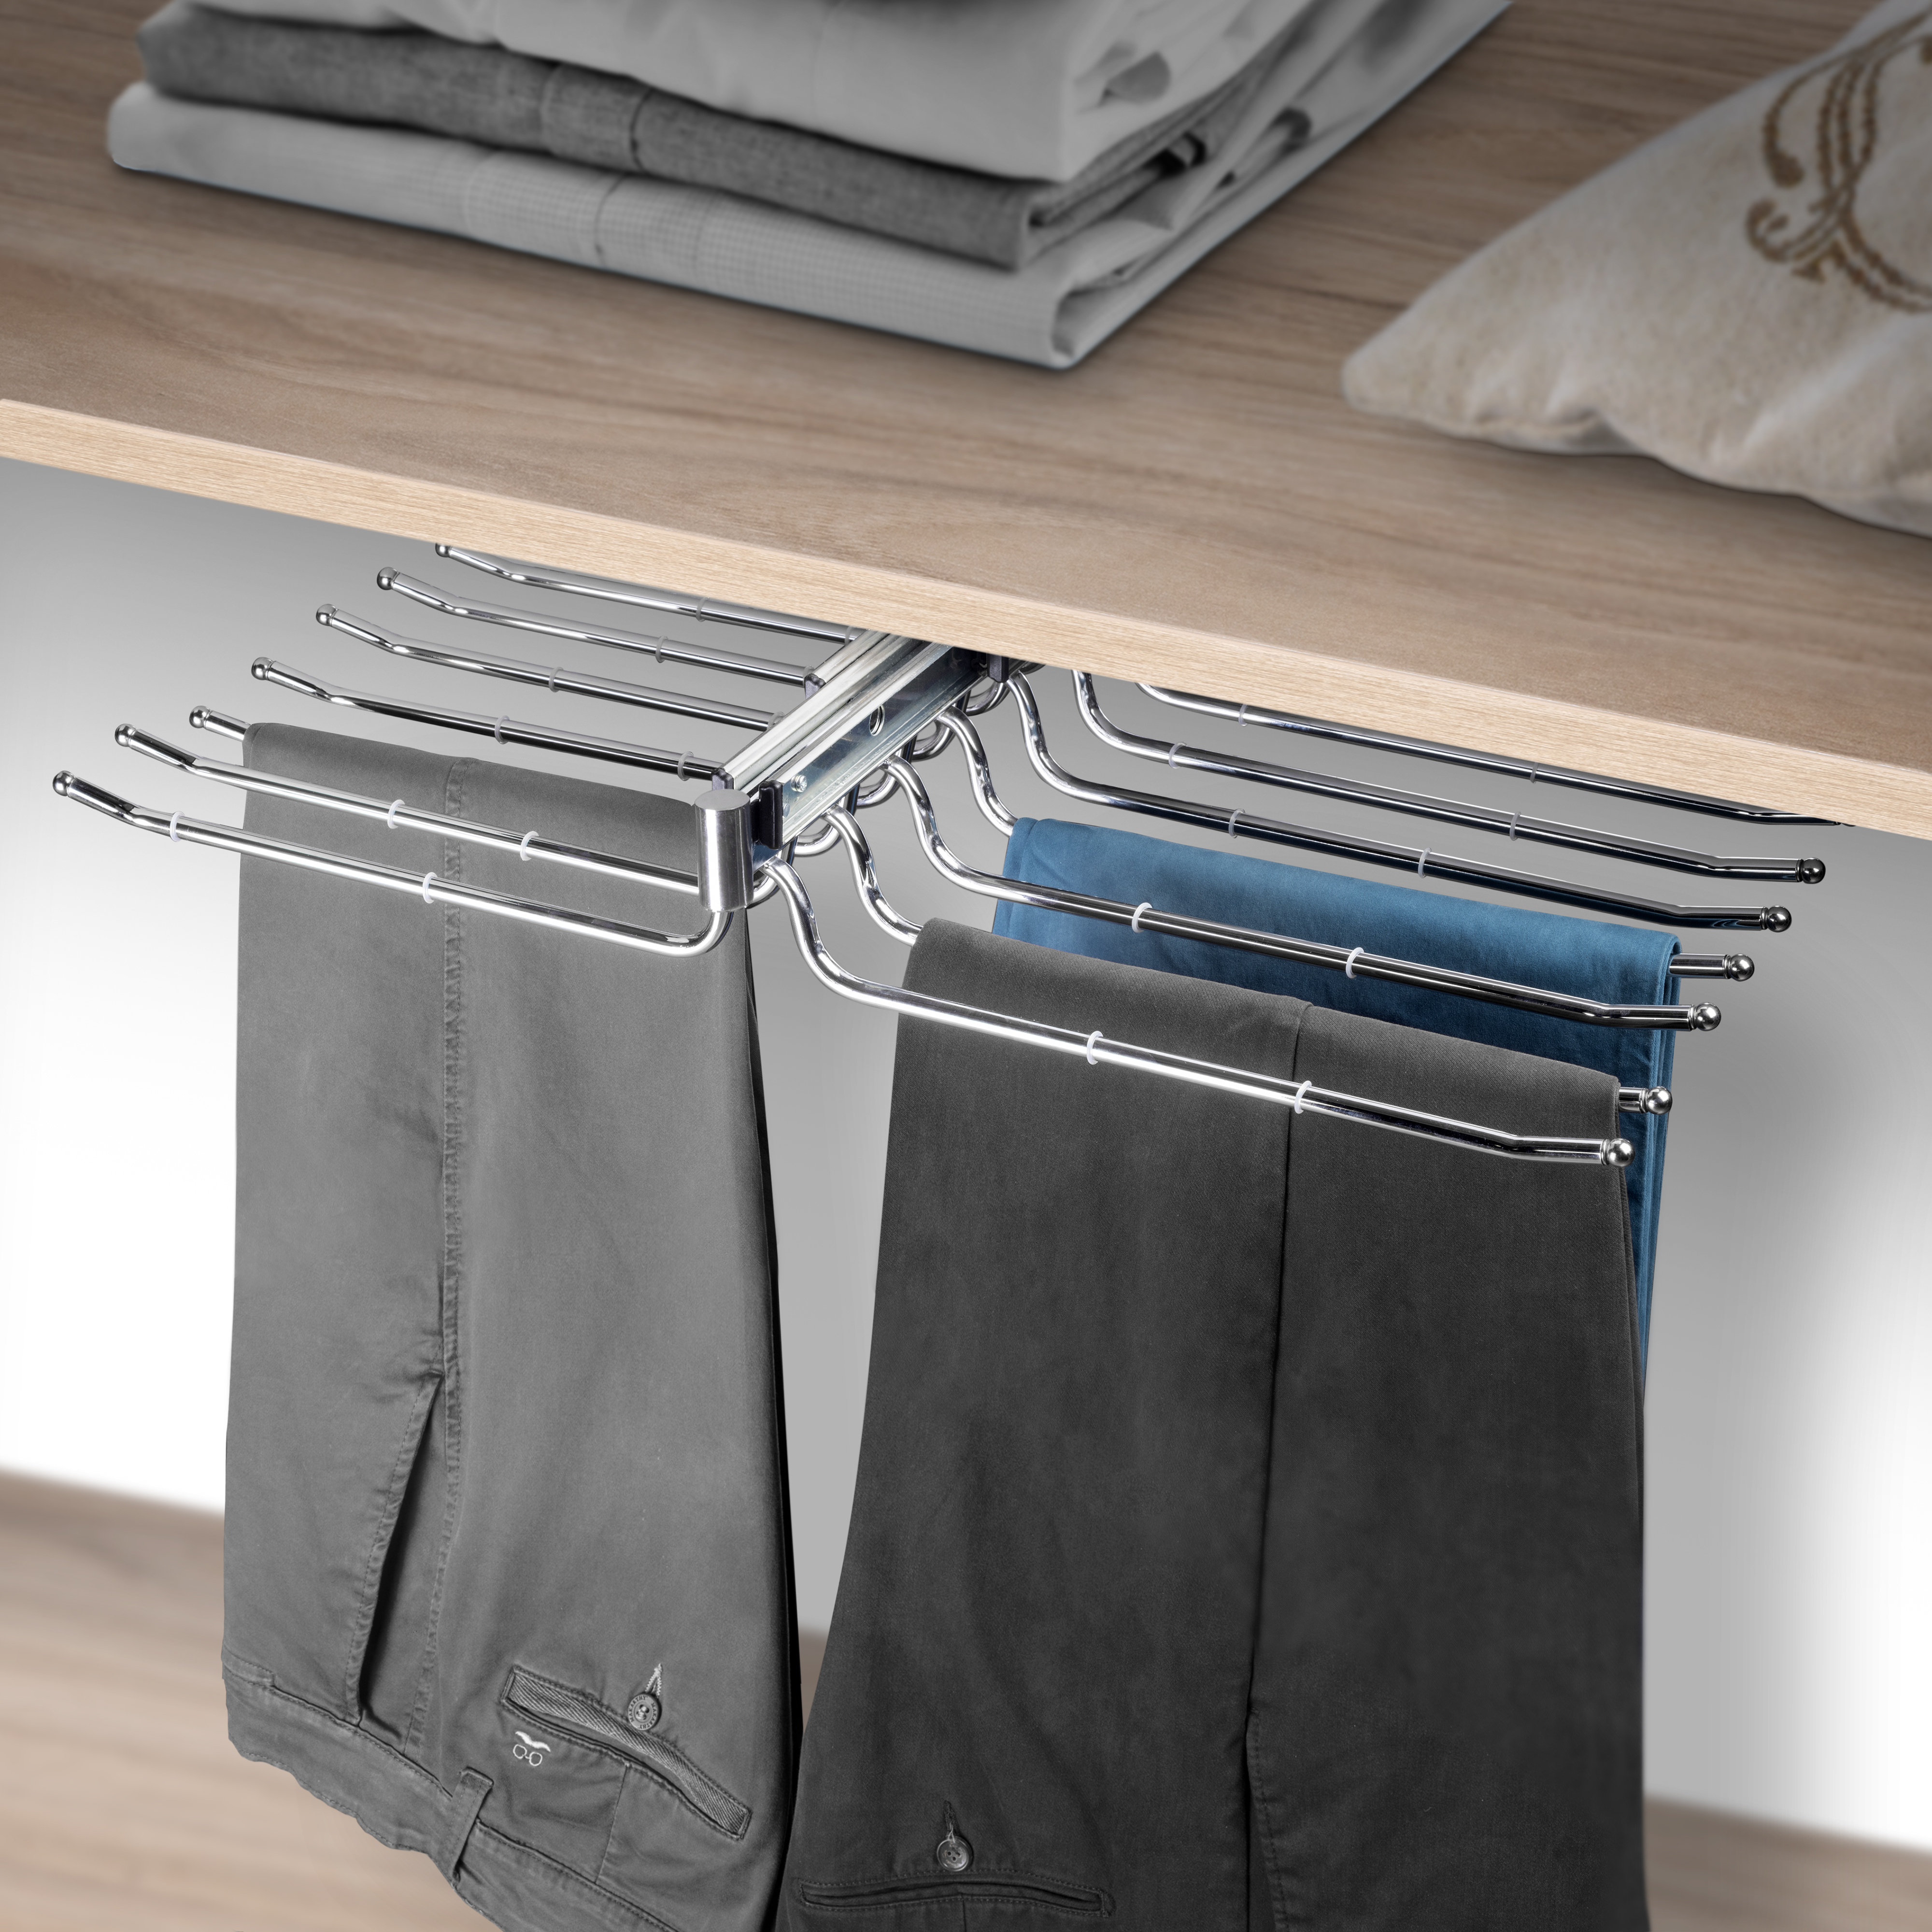 Pantalonero extraíble para interior de un armario.  Interiores de armarios,  Armarios, Interiores de placard